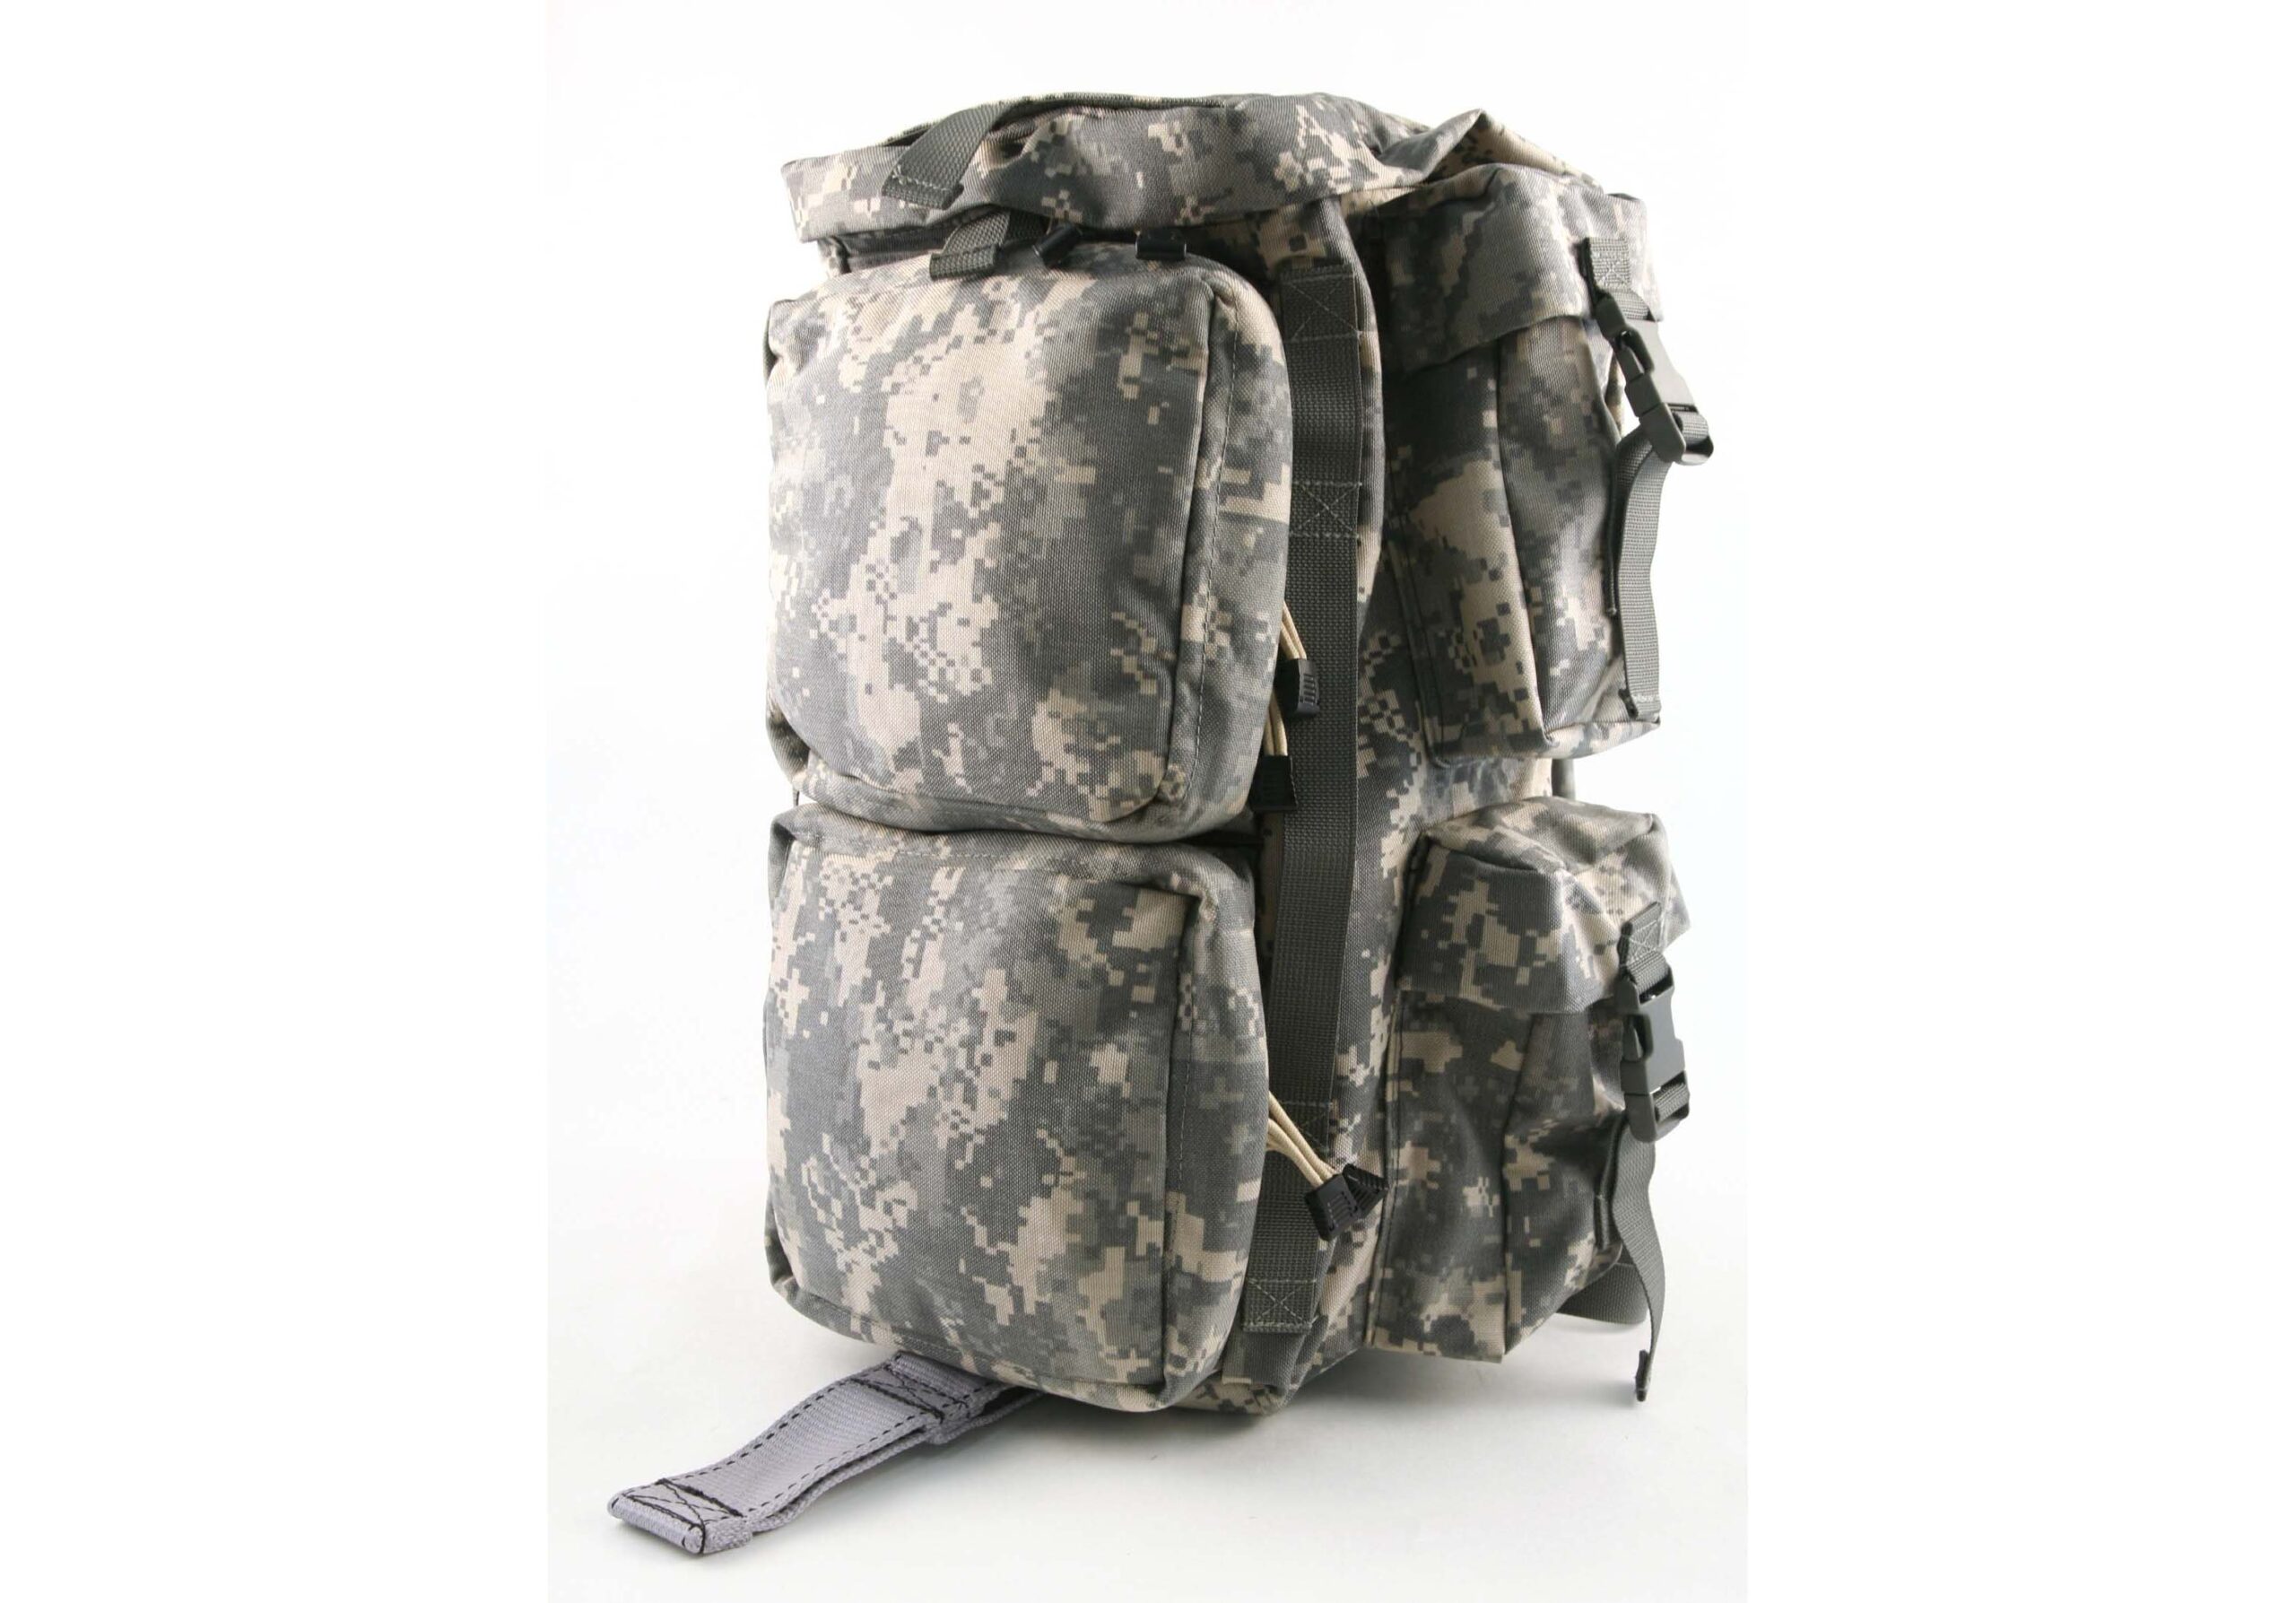 AUSTRIAN MILITARY SHOULDER BAG COMBAT DAY PACK GENUINE SURPLUS | eBay